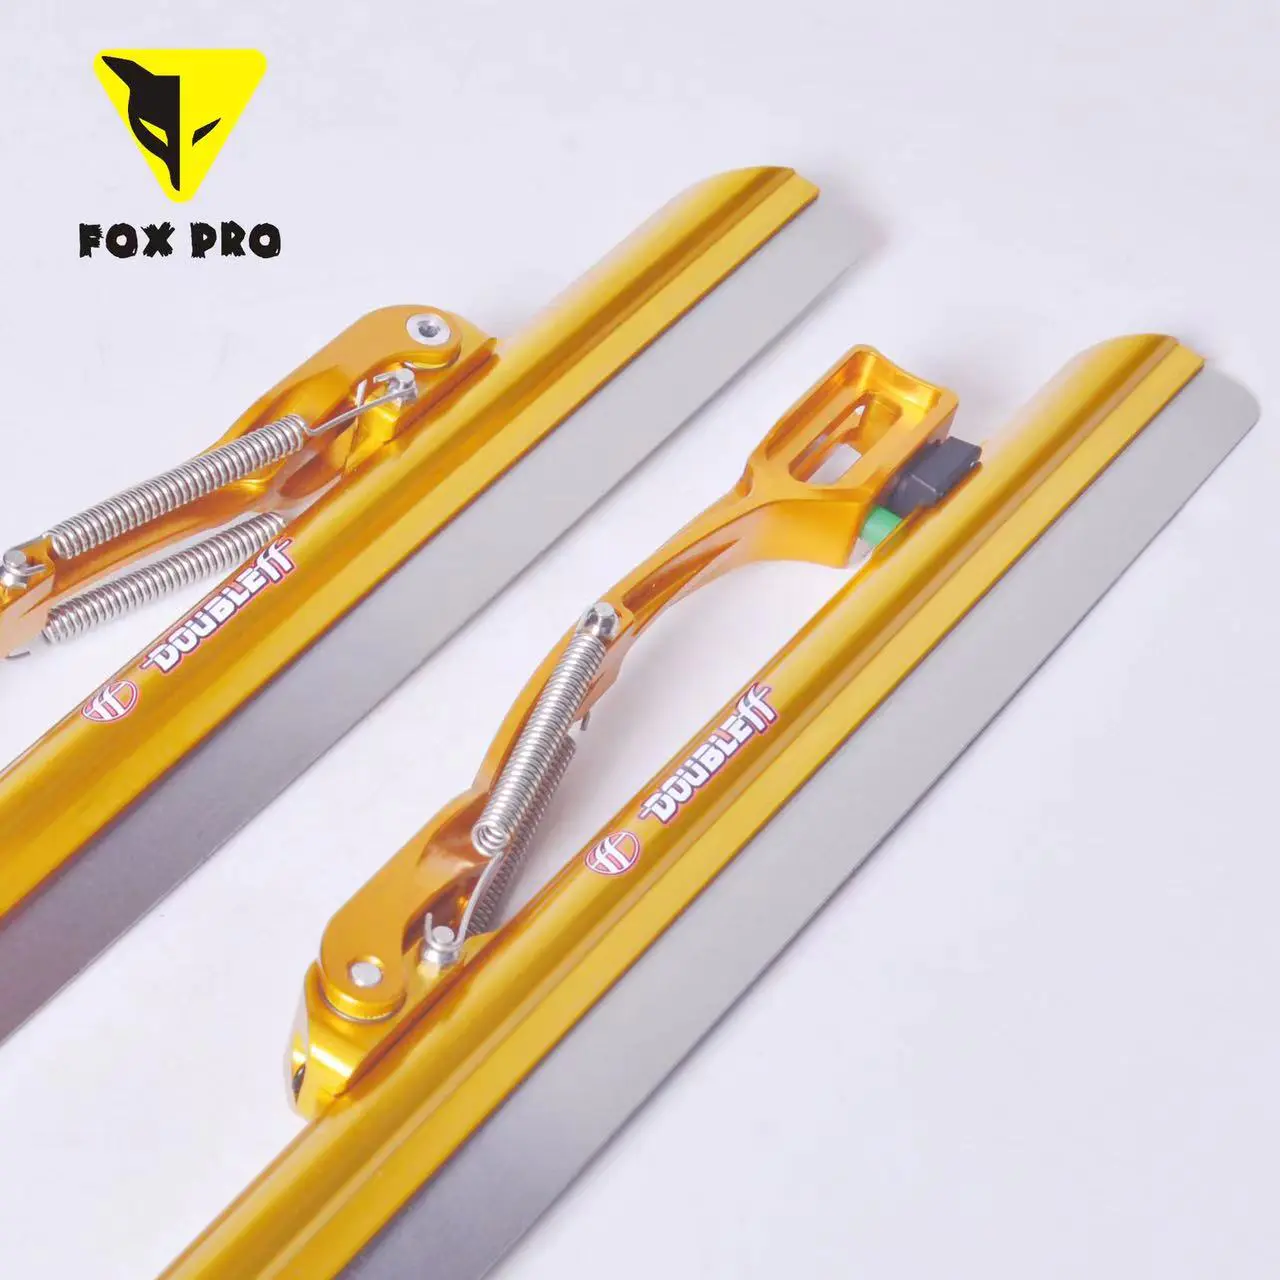 FOX PRO x Double FF 64 HRC Long Track Ice Skate Blades CNC Aluminum 7005 Ice Skate Blades